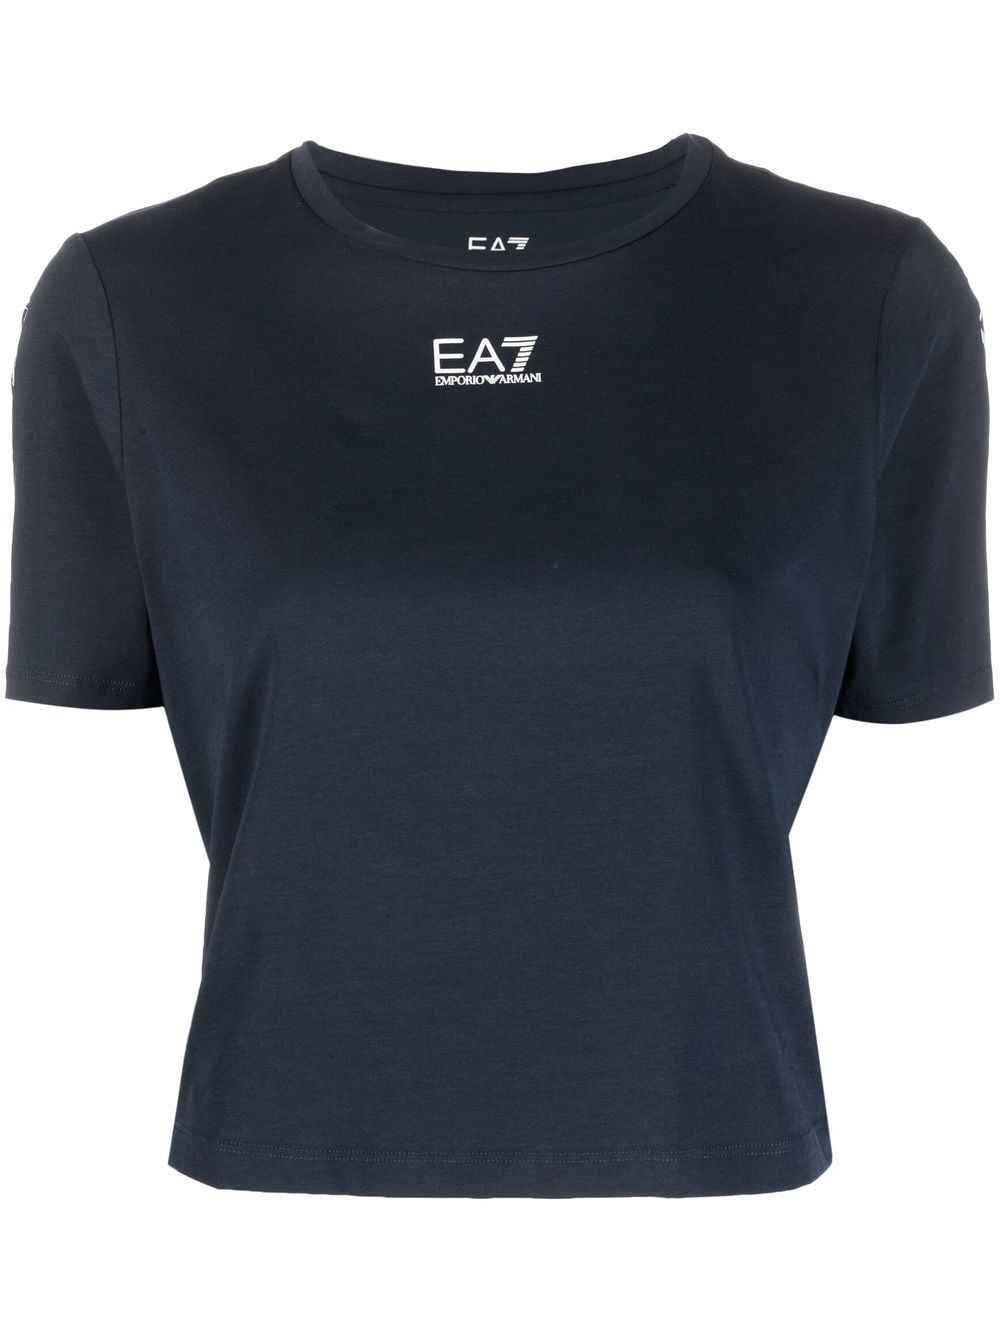 Ea7 Emporio Armani Cropped-T-Shirt mit Logo - Blau von Ea7 Emporio Armani